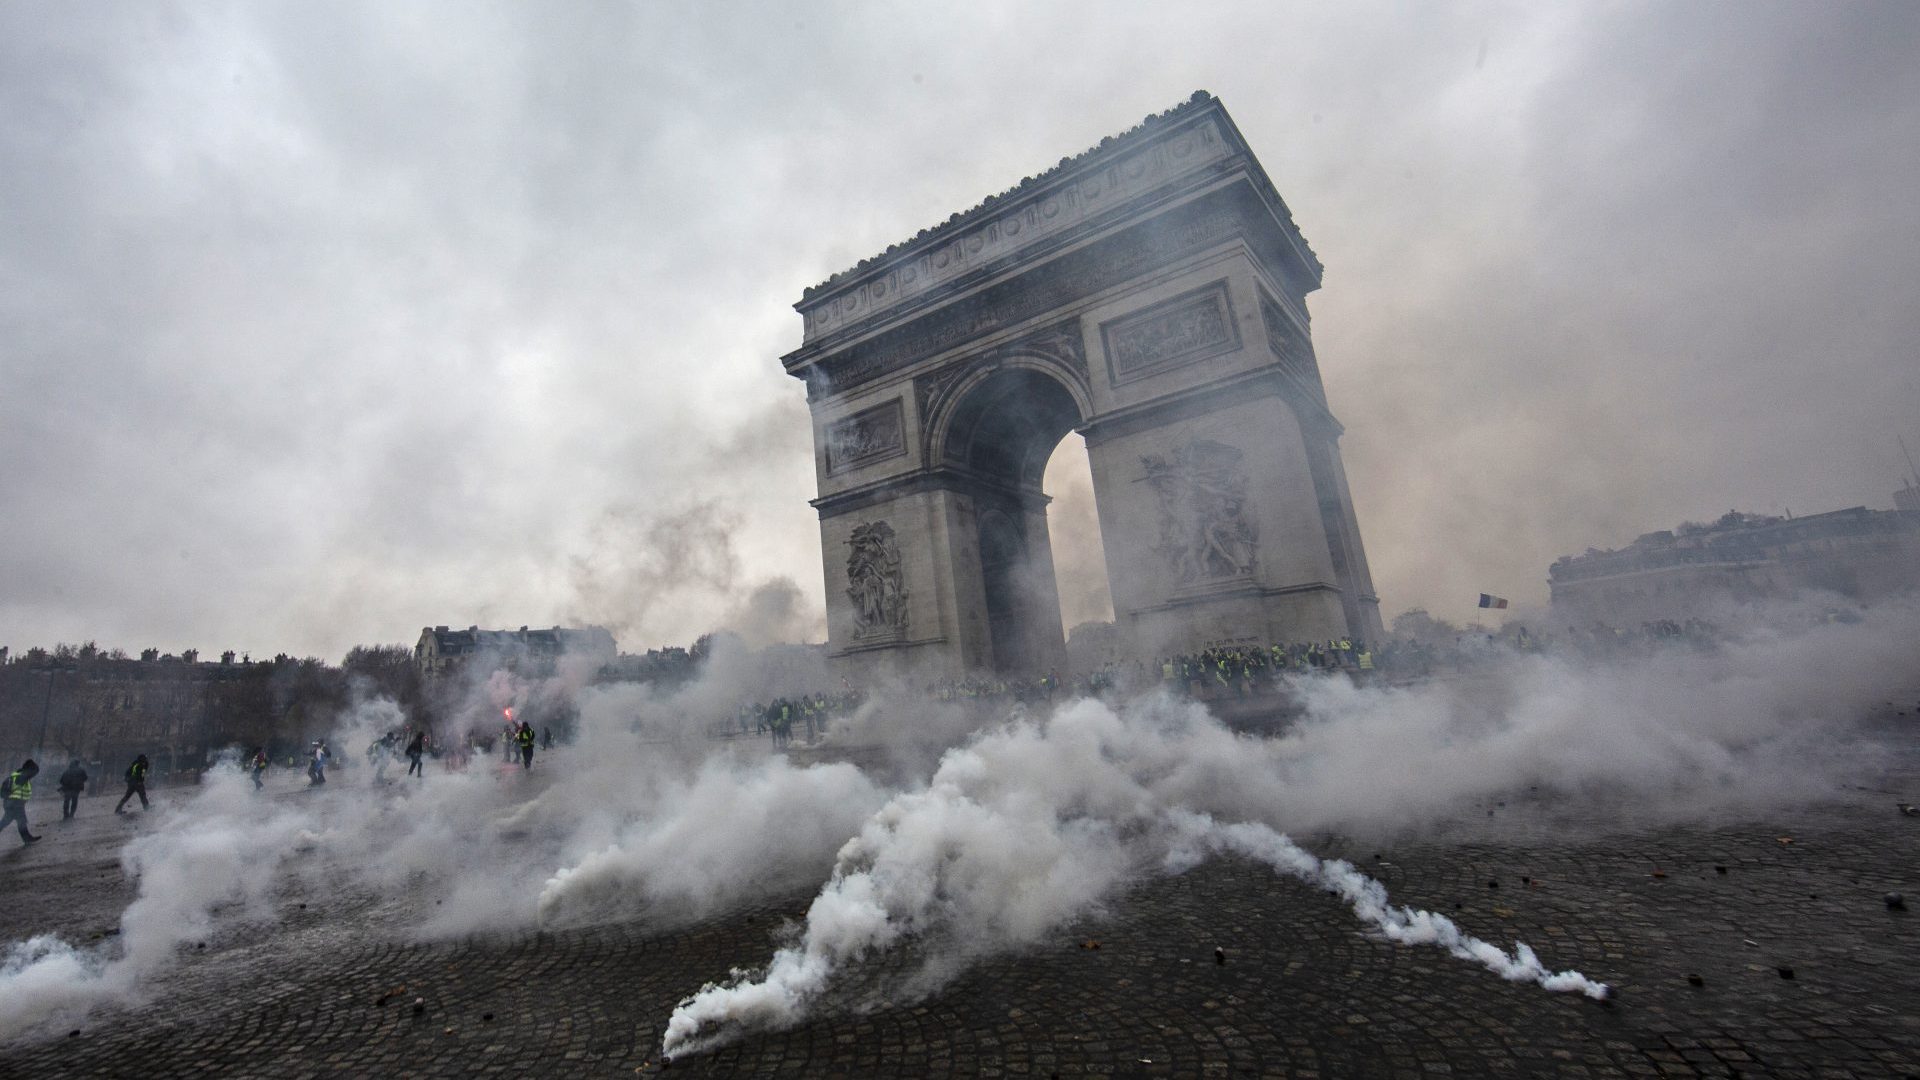 Teargas surrounds riot police as they clash with protesters near the Arc de Triomphe. Photo: Véronique de Viguerie/Getty